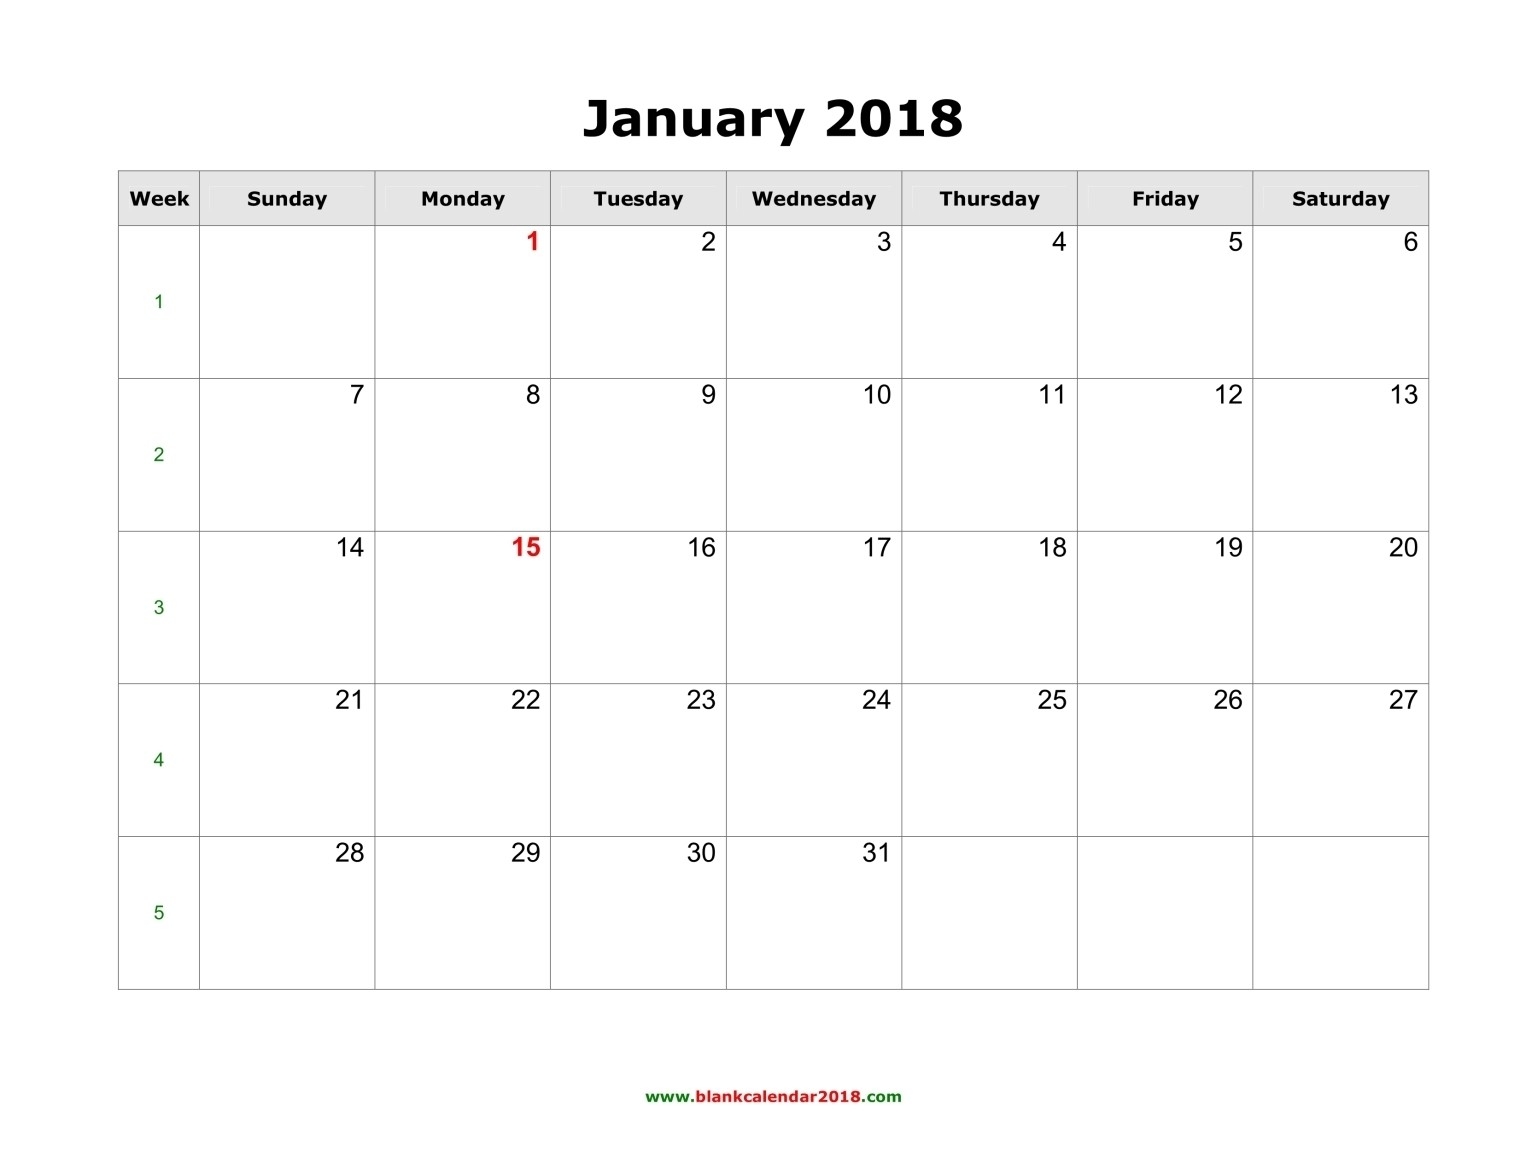 Blank Calendar 2018-Monthly Calendar That Can Be Edited